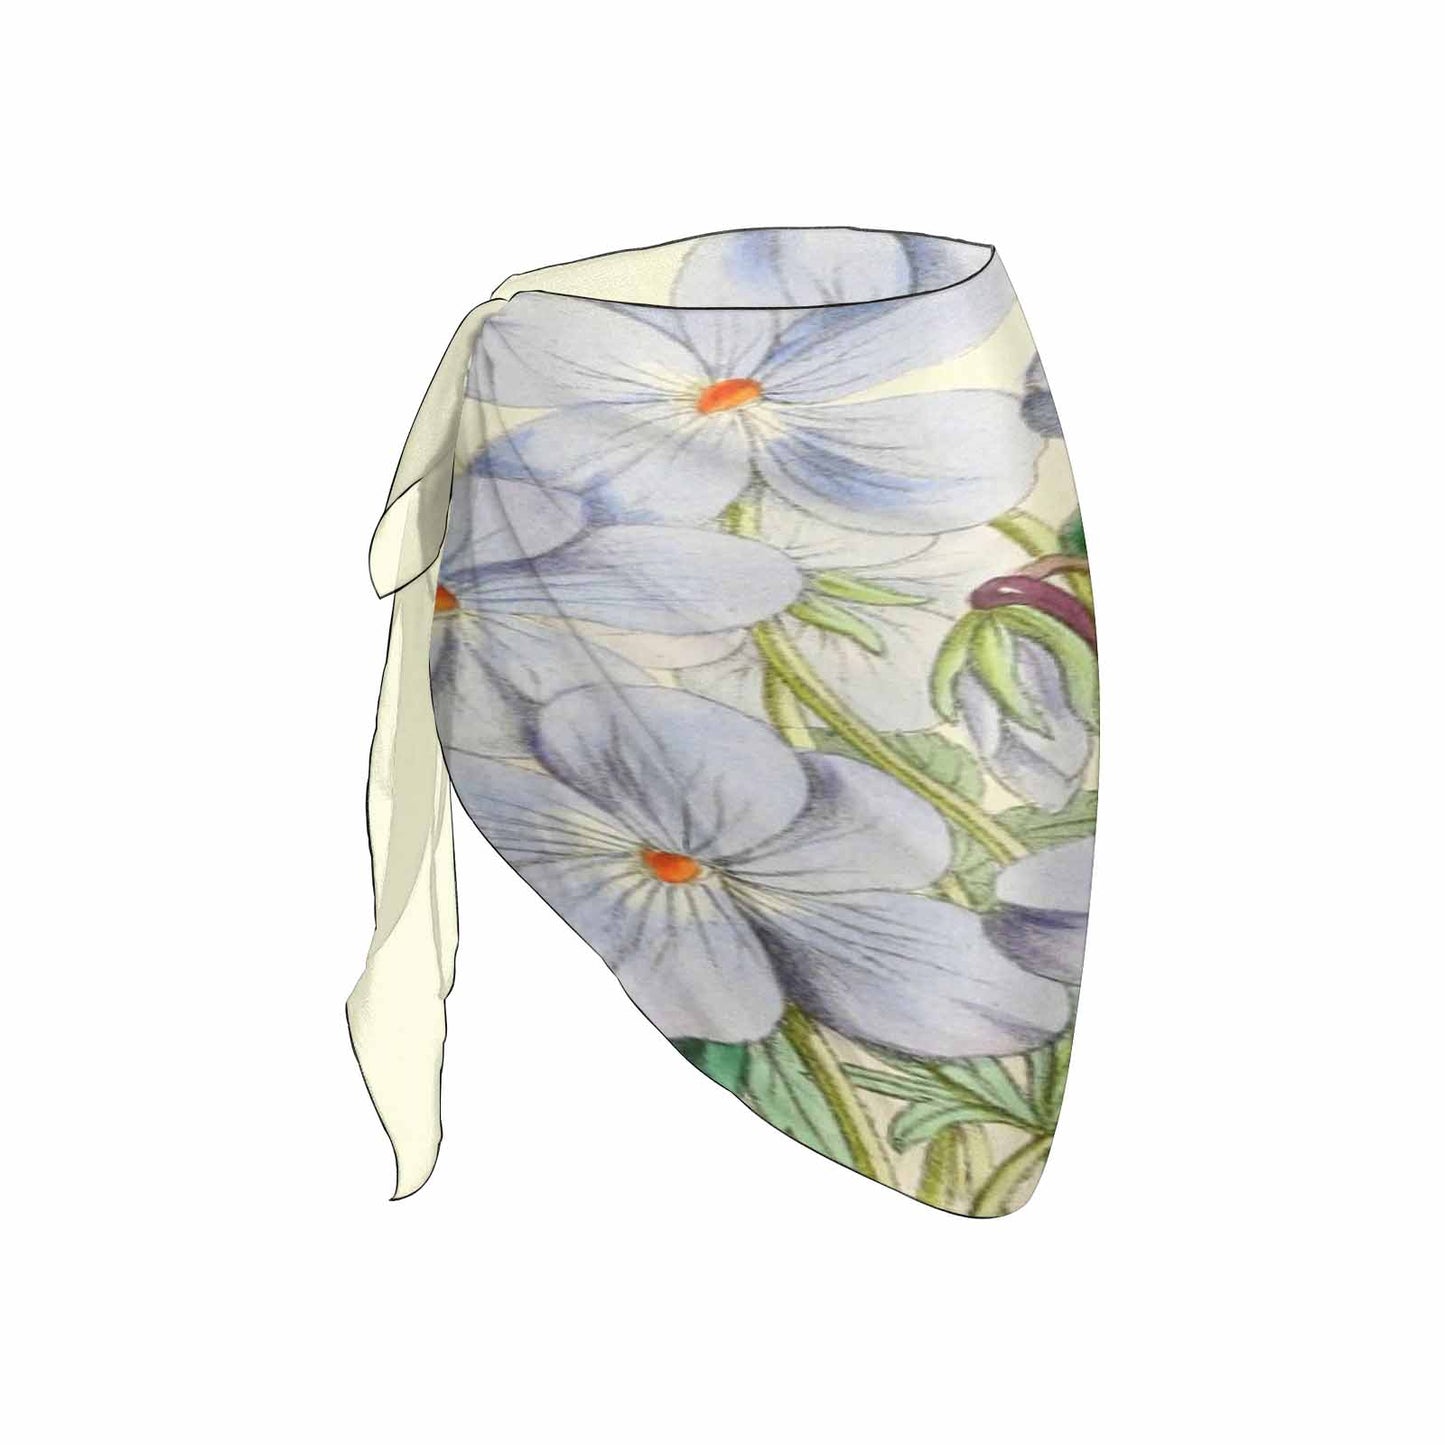 Vintage floral, beach sarong, beach coverup, swim wear, Design 13